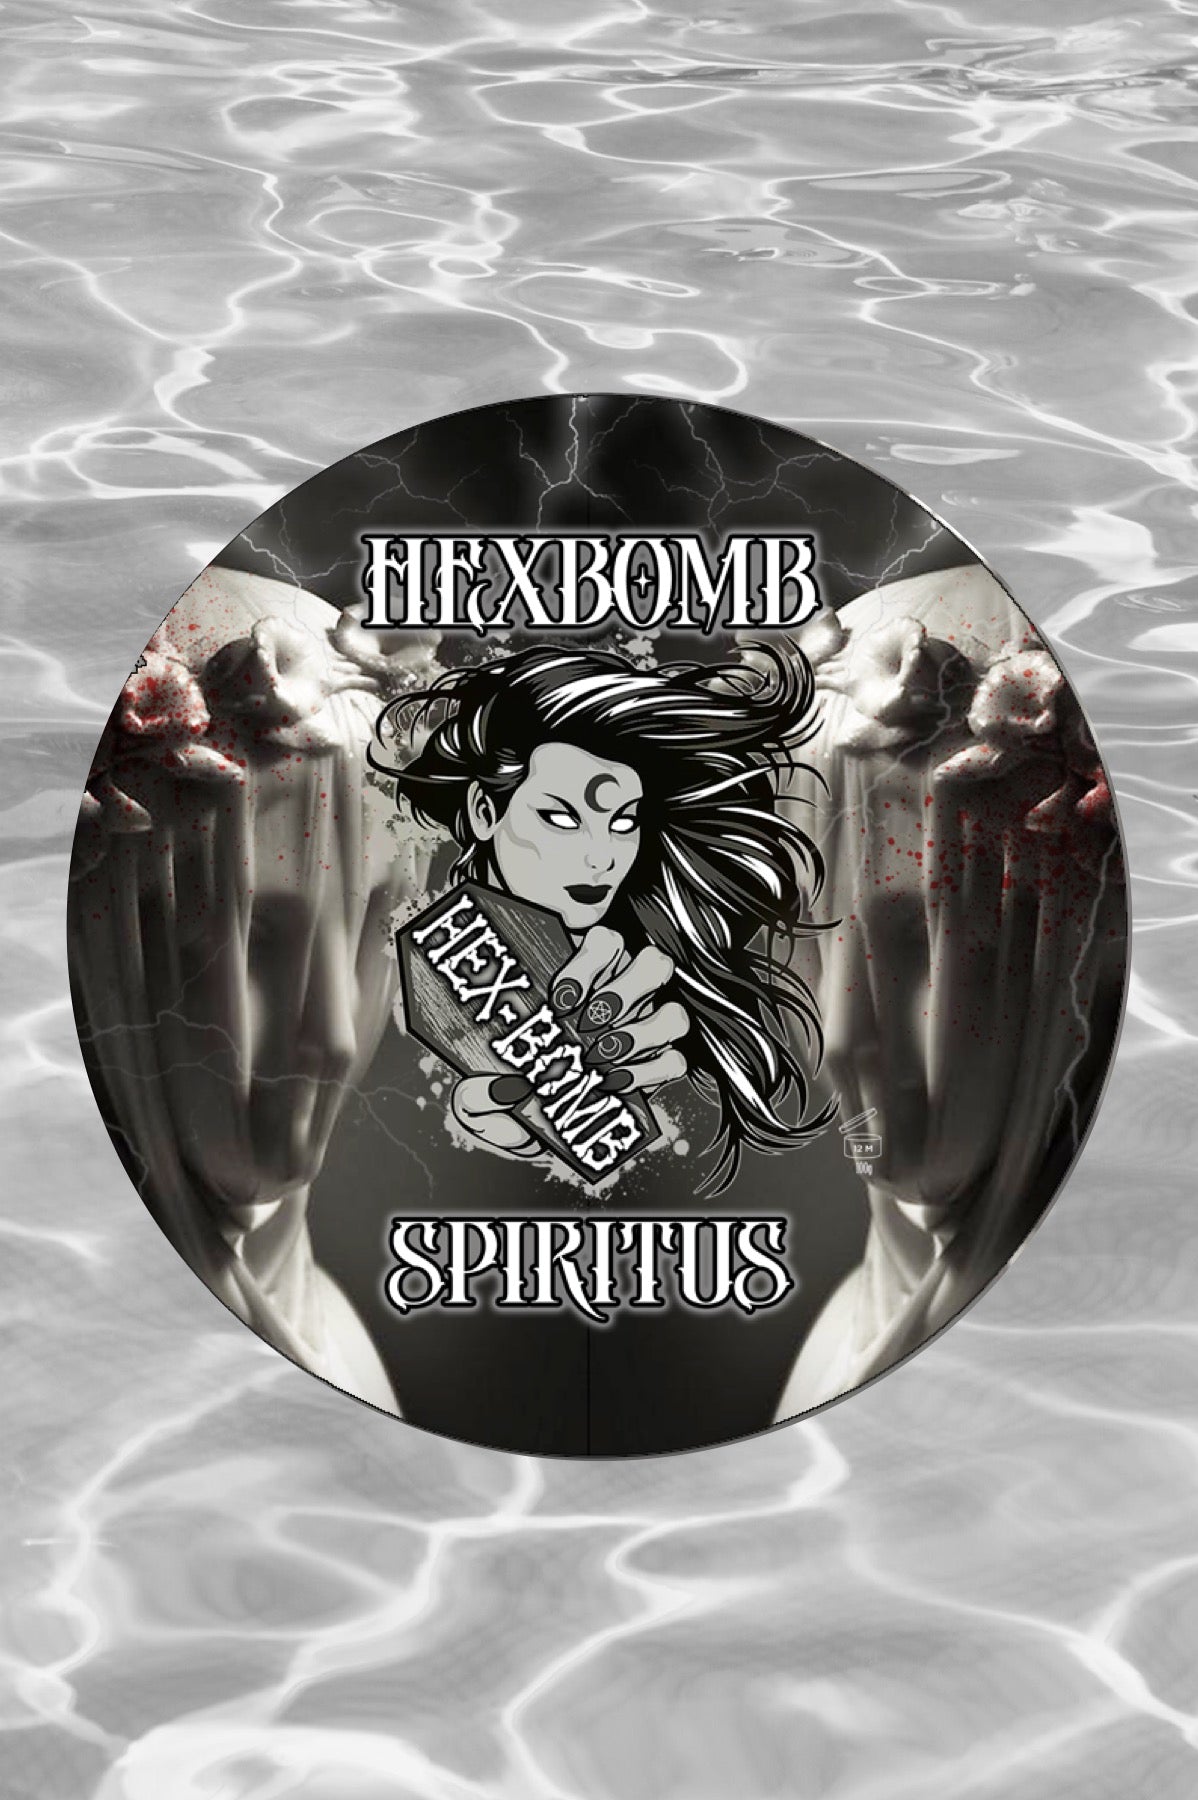 Spiritus - Opaque grey Hexbomb • Ashes to ashes